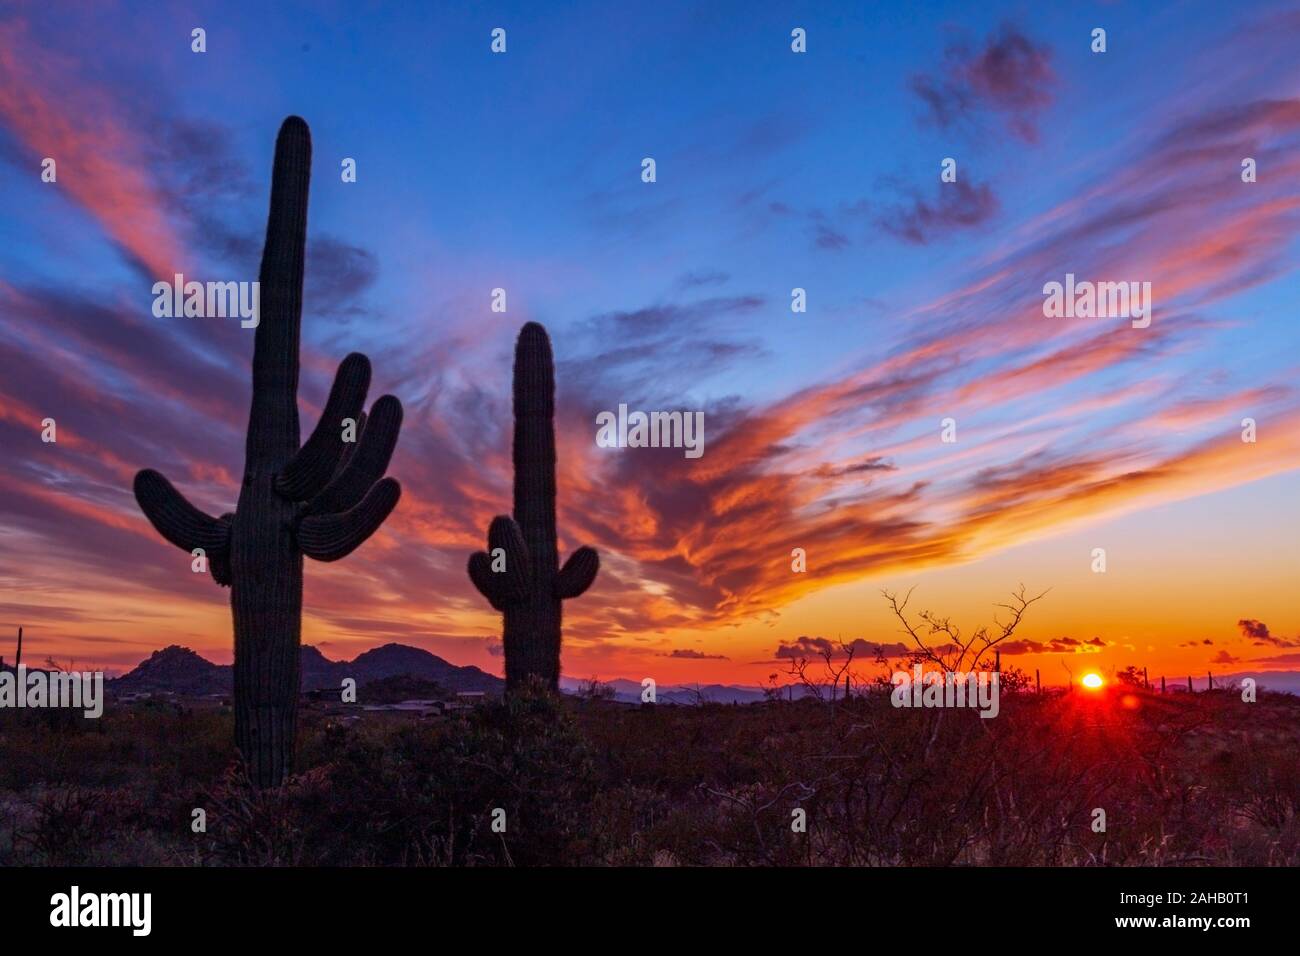 Classic Arizona Desert Landscape With Saguaro Cactus and Vibrant colored louds Stock Photo